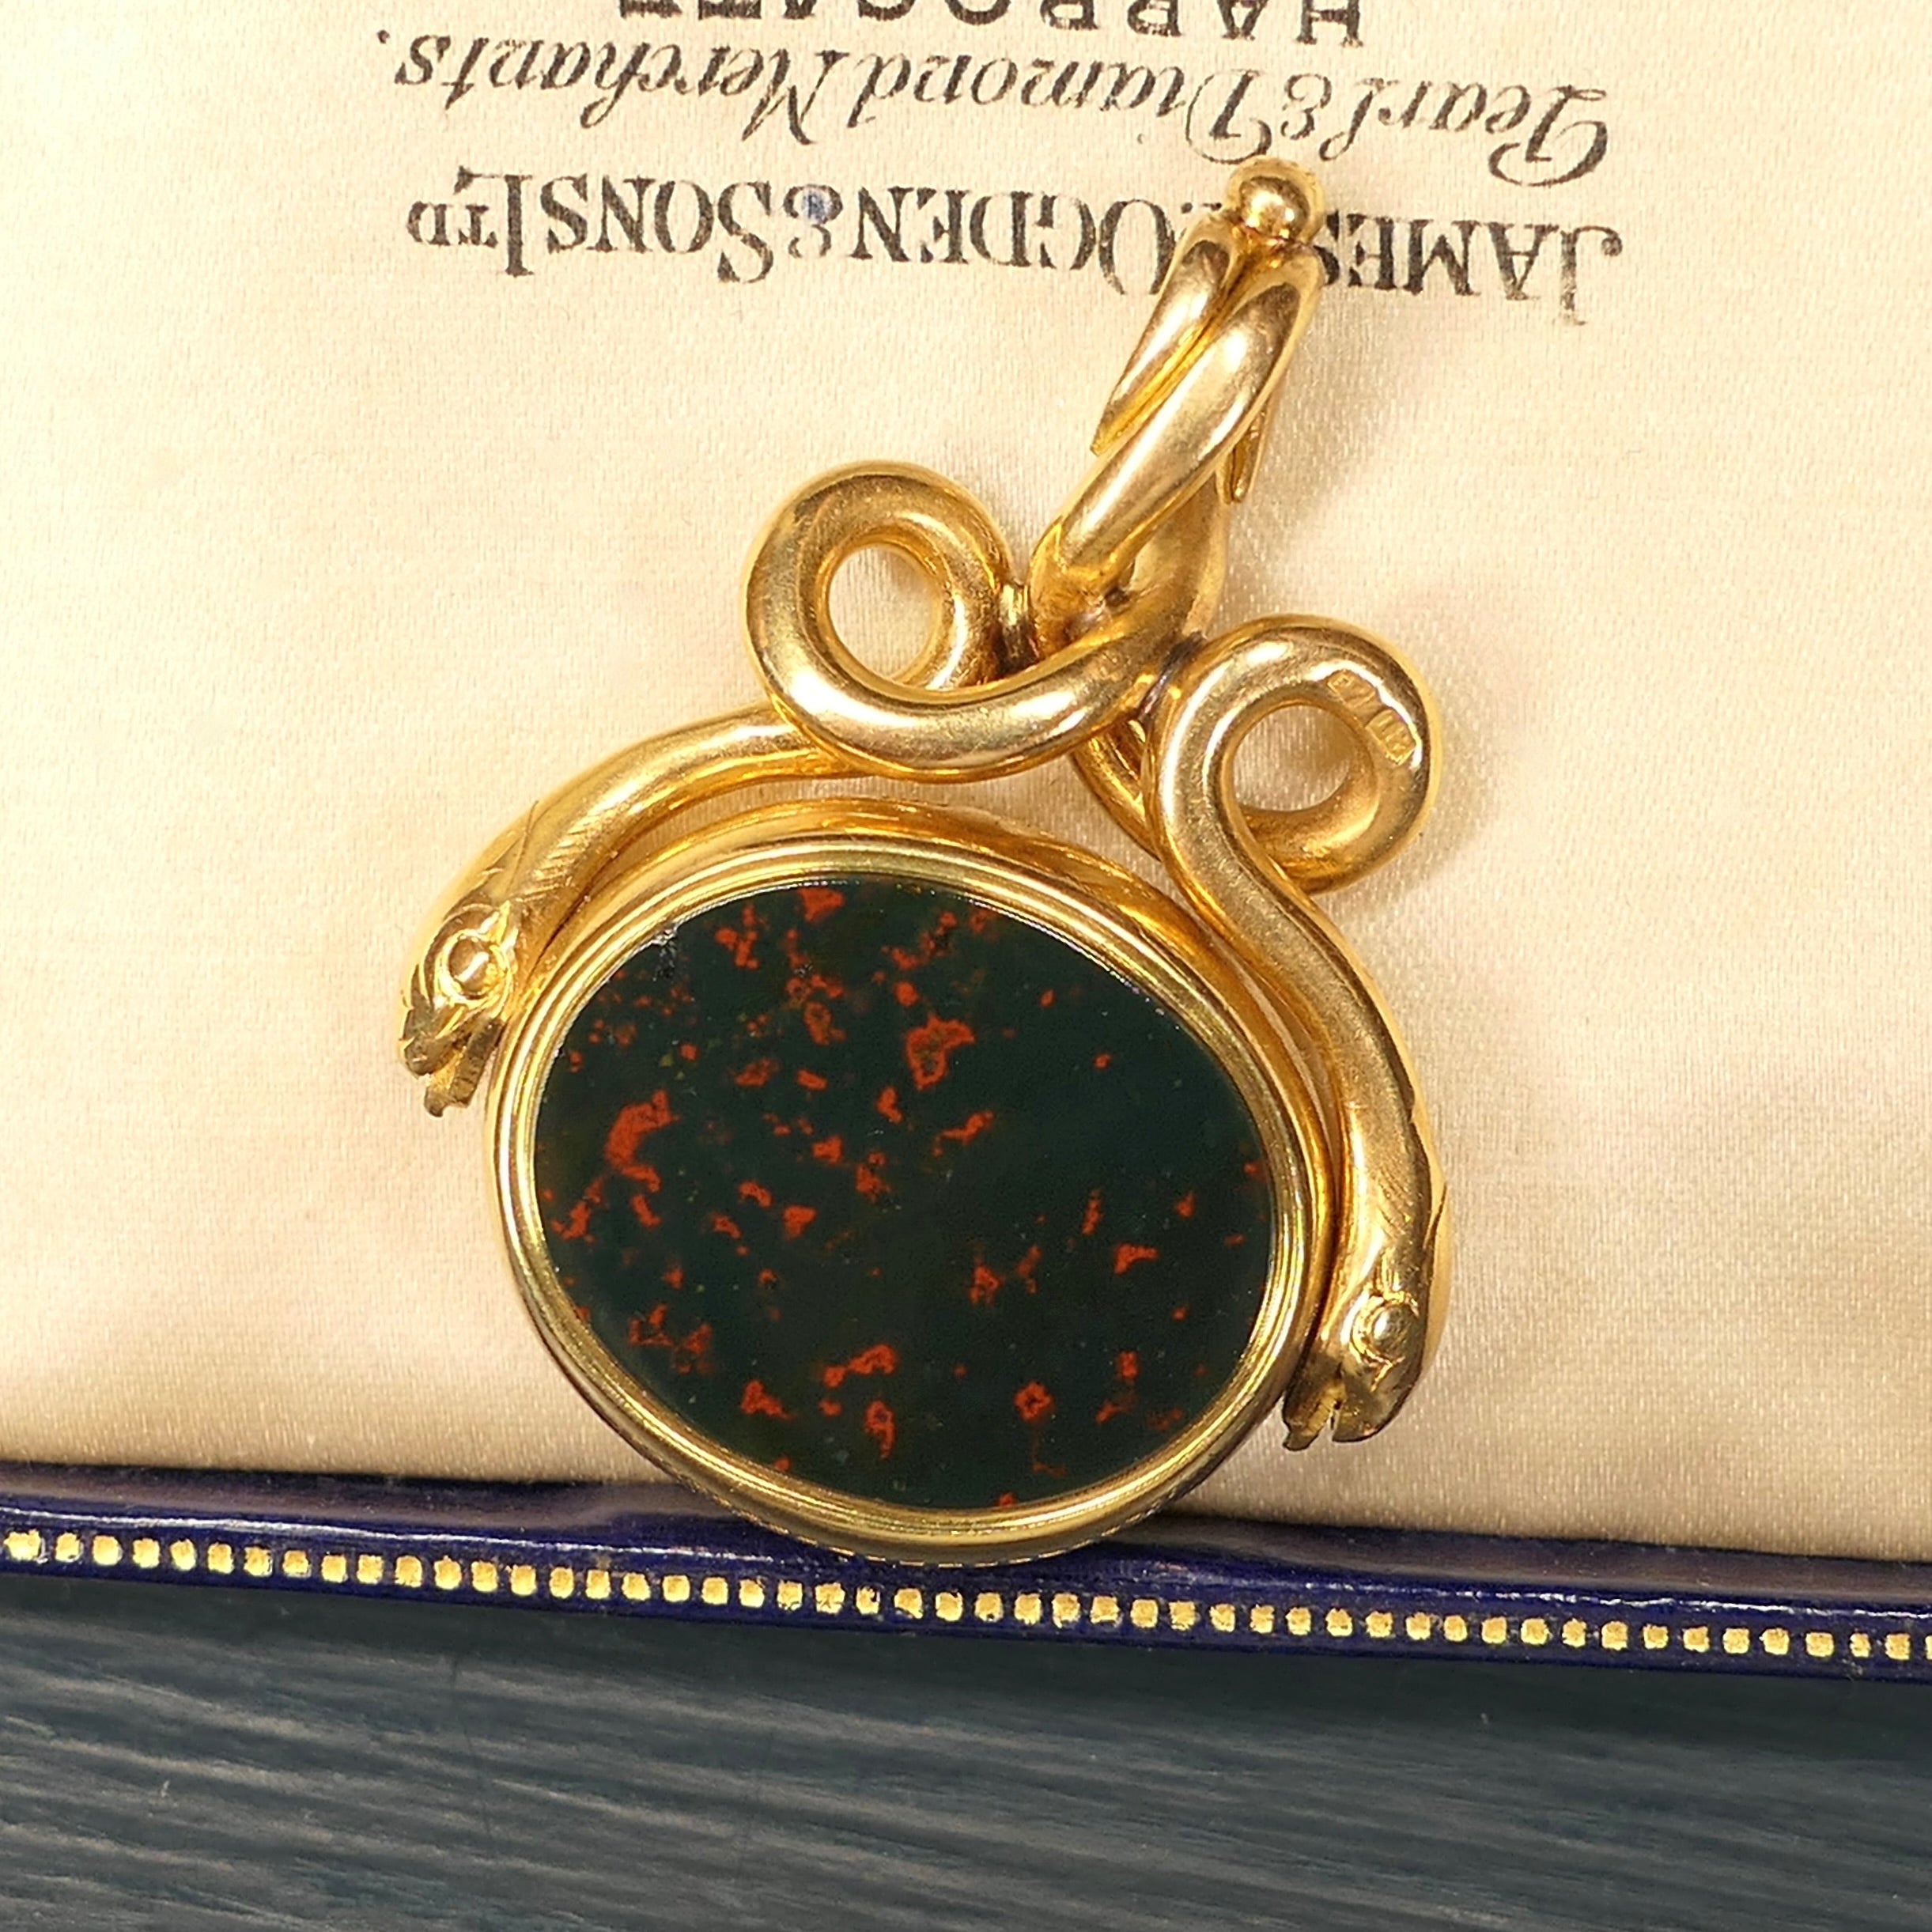 bloodstone double snake antique fob, pendant